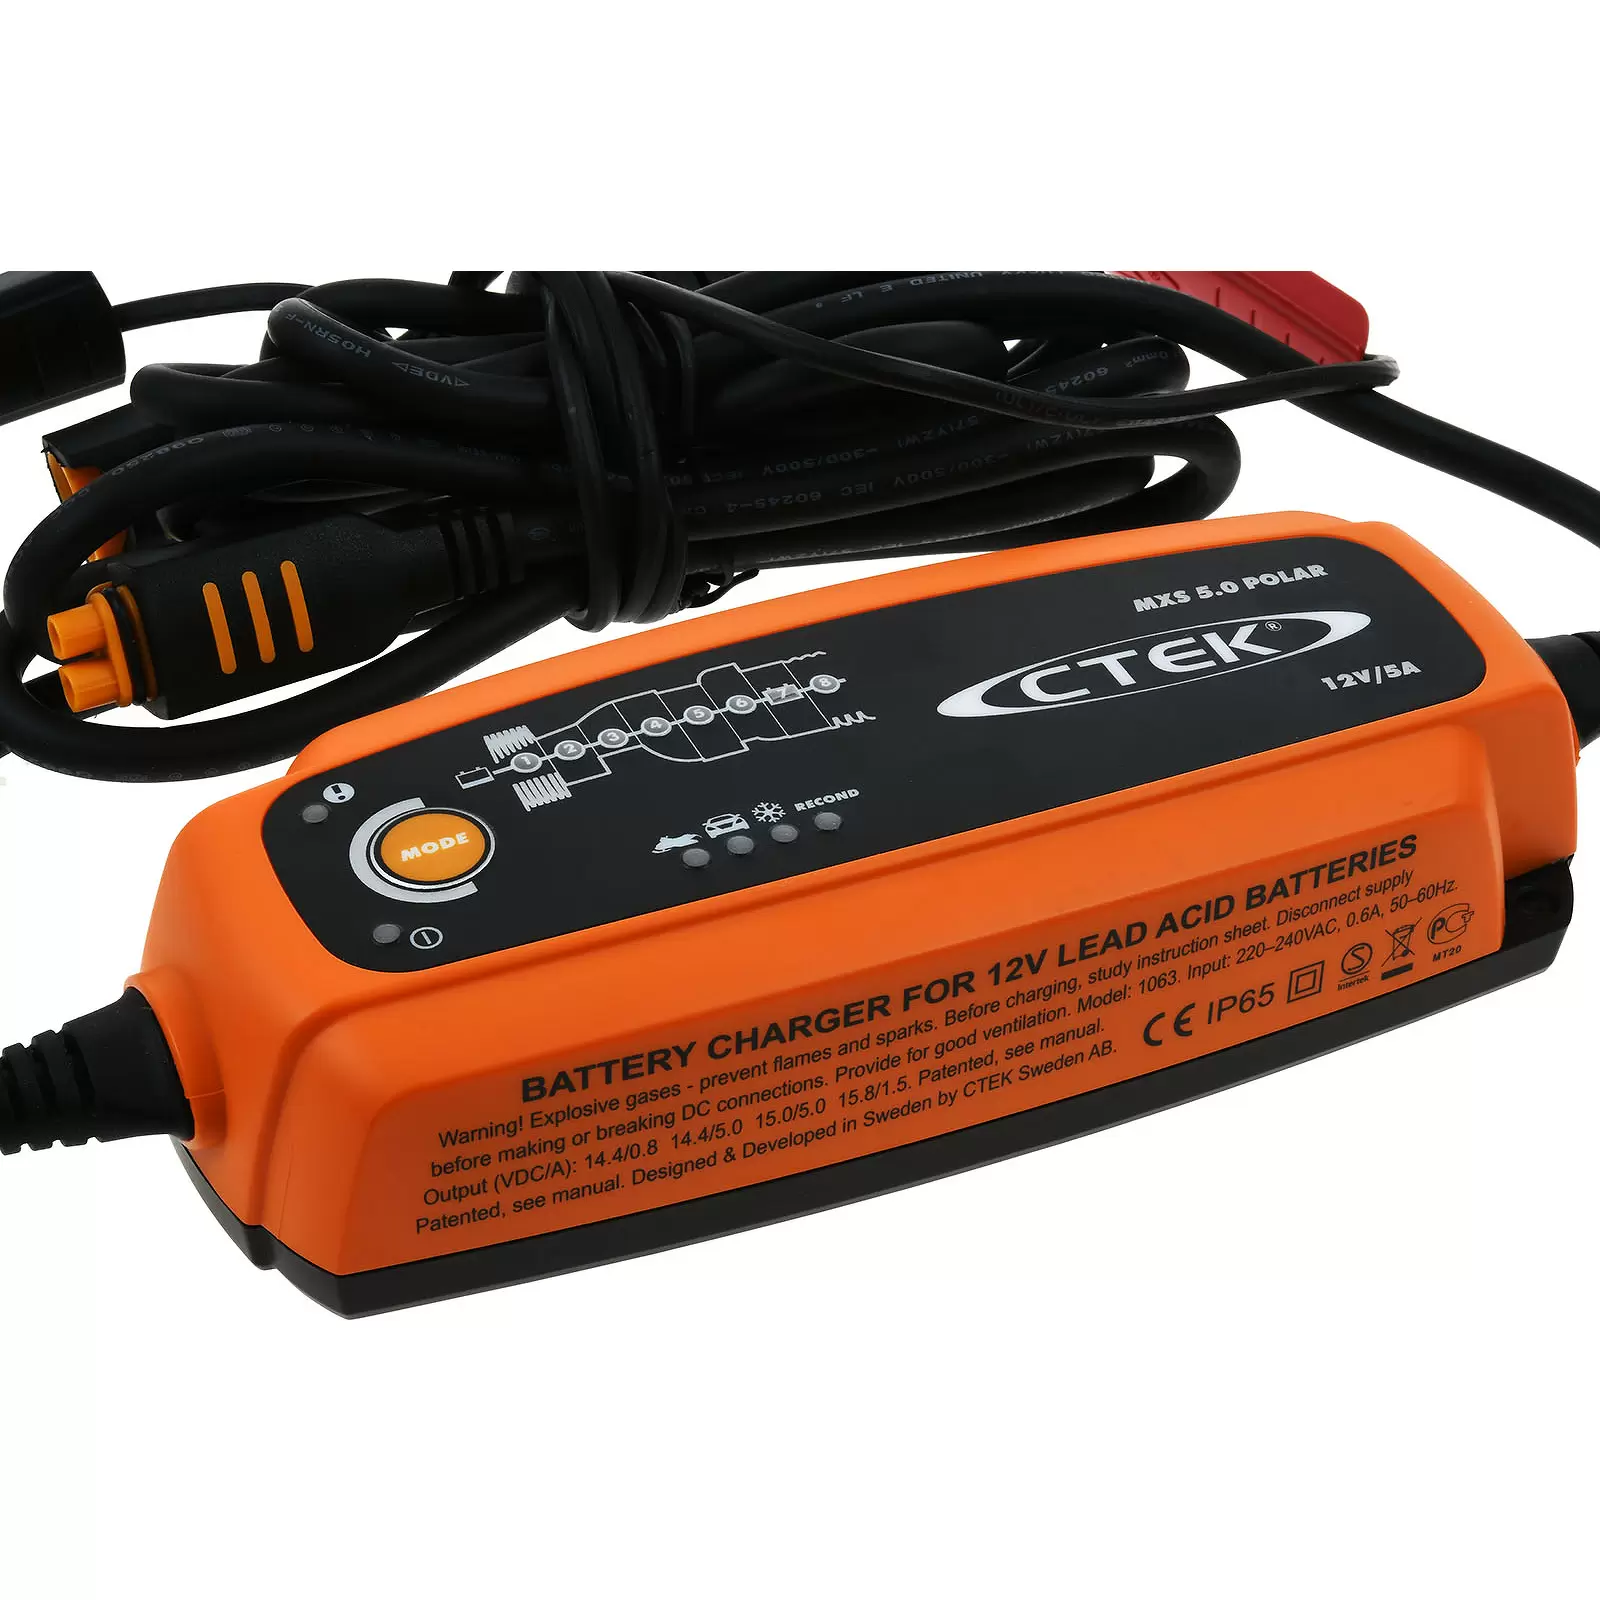 CTEK MXS 5.0 Polar (56-855) Batterie-Ladegerät, vollautomatisch